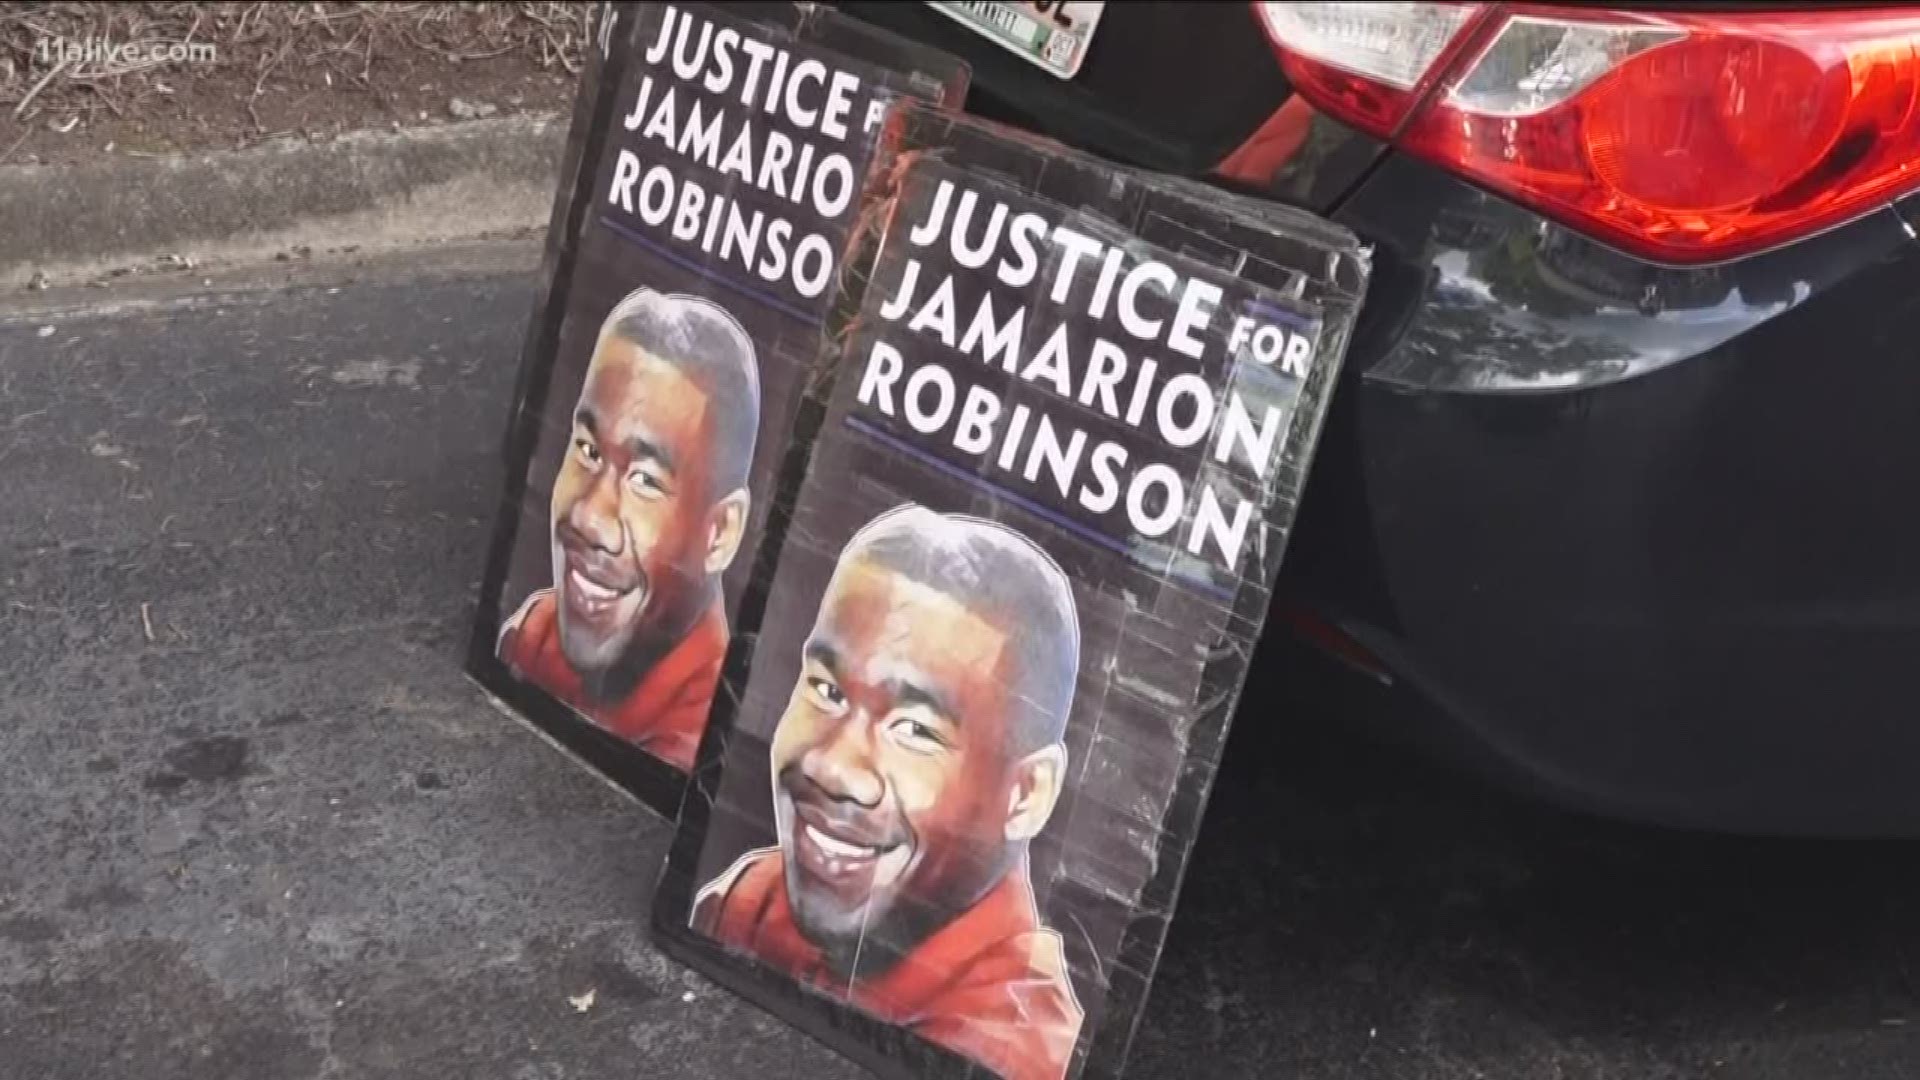 Monday marked three years since Jamarion Robinson was killed.